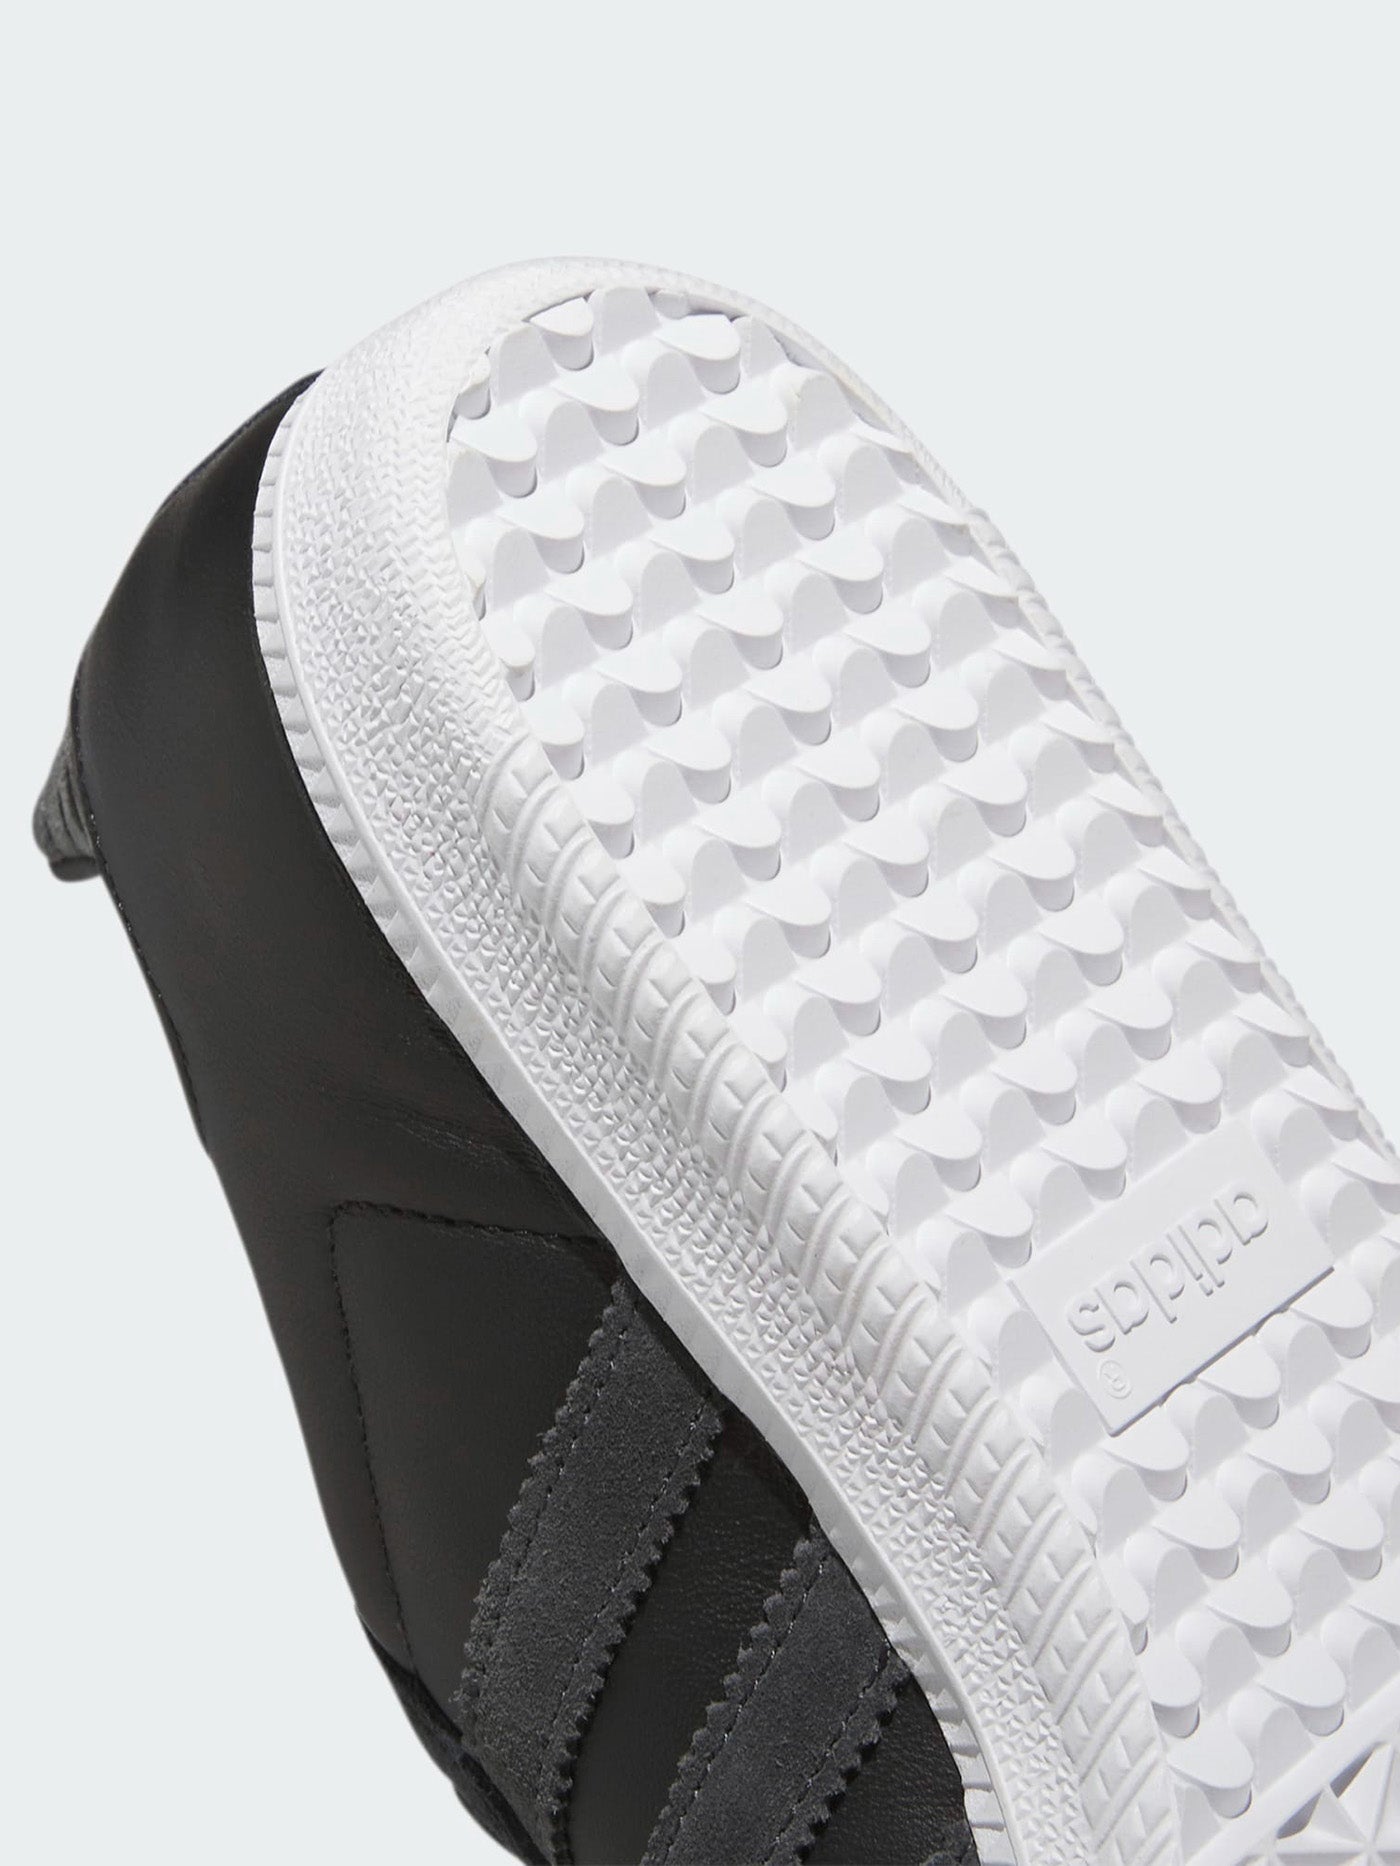 Adidas Fall 2023 Samba ADV Core Black/Carbon/Silver Shoes